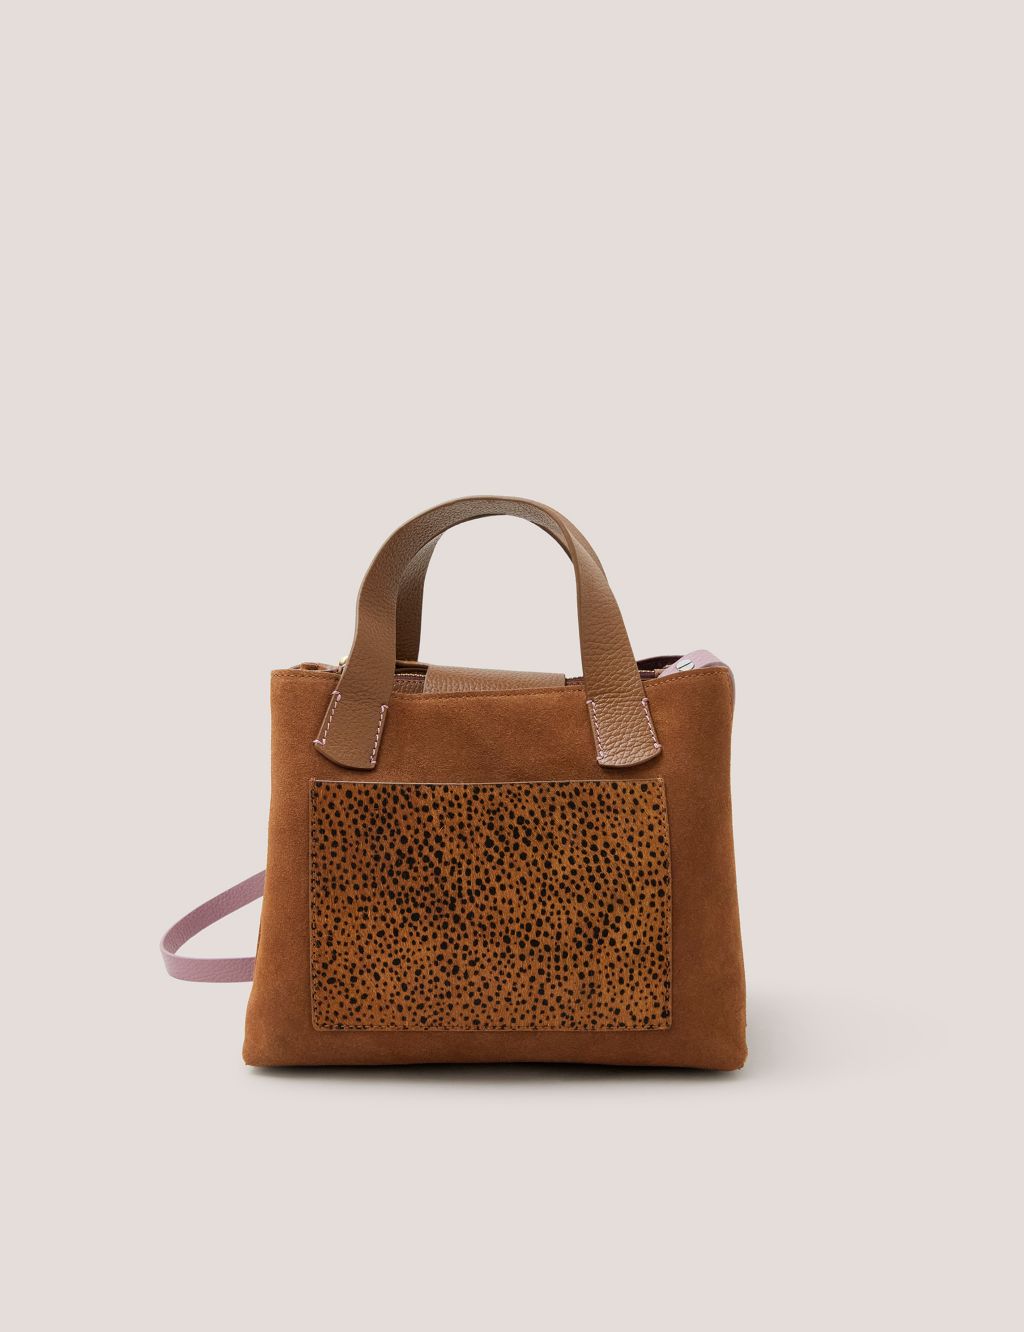 Leather Animal Print Mini Tote Bag image 2